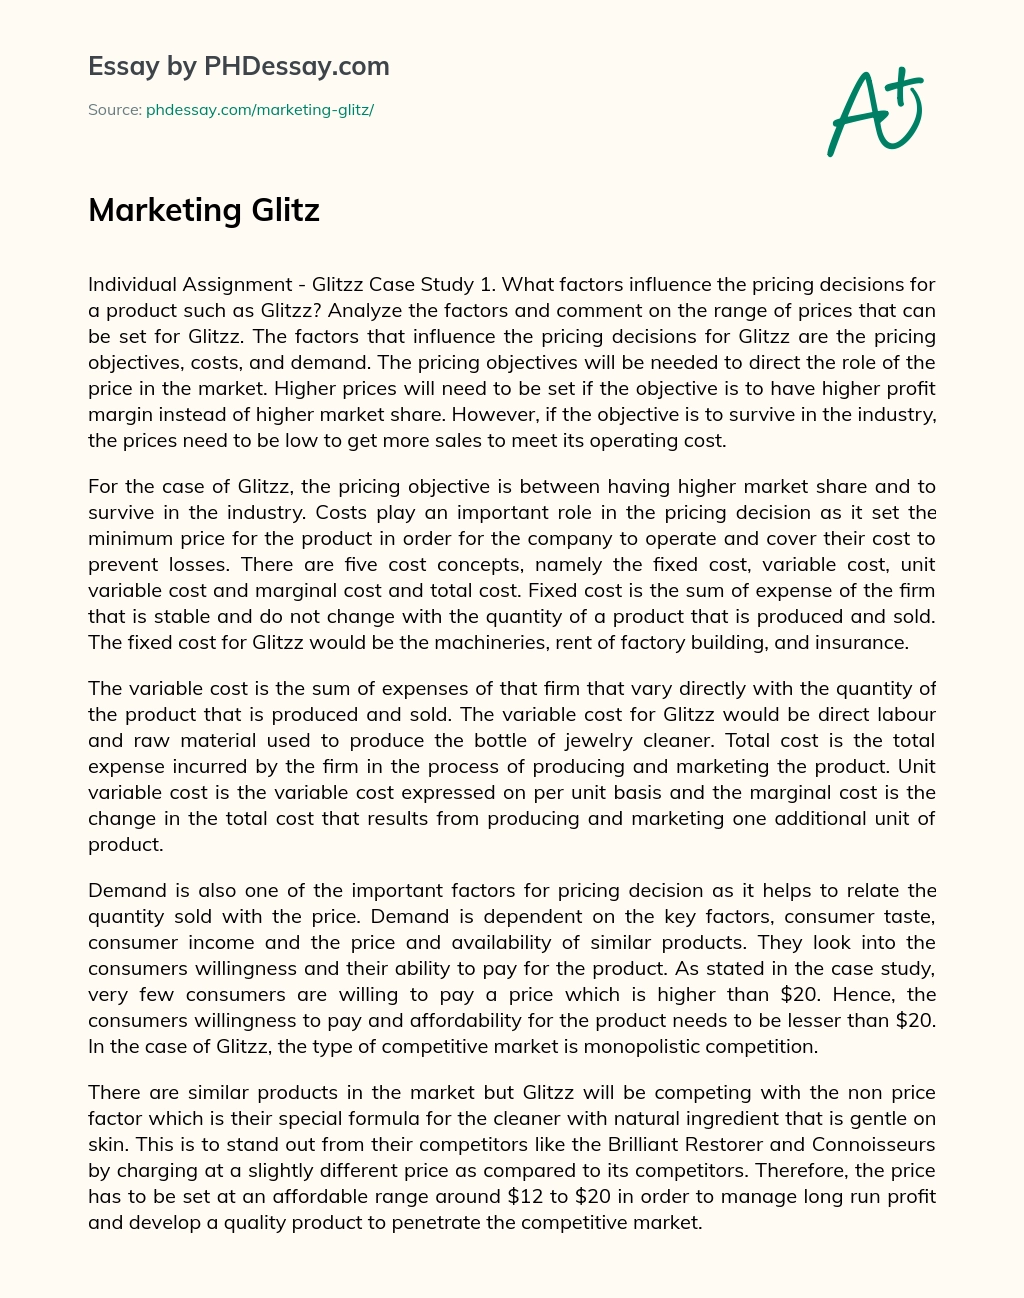 Marketing Glitz essay